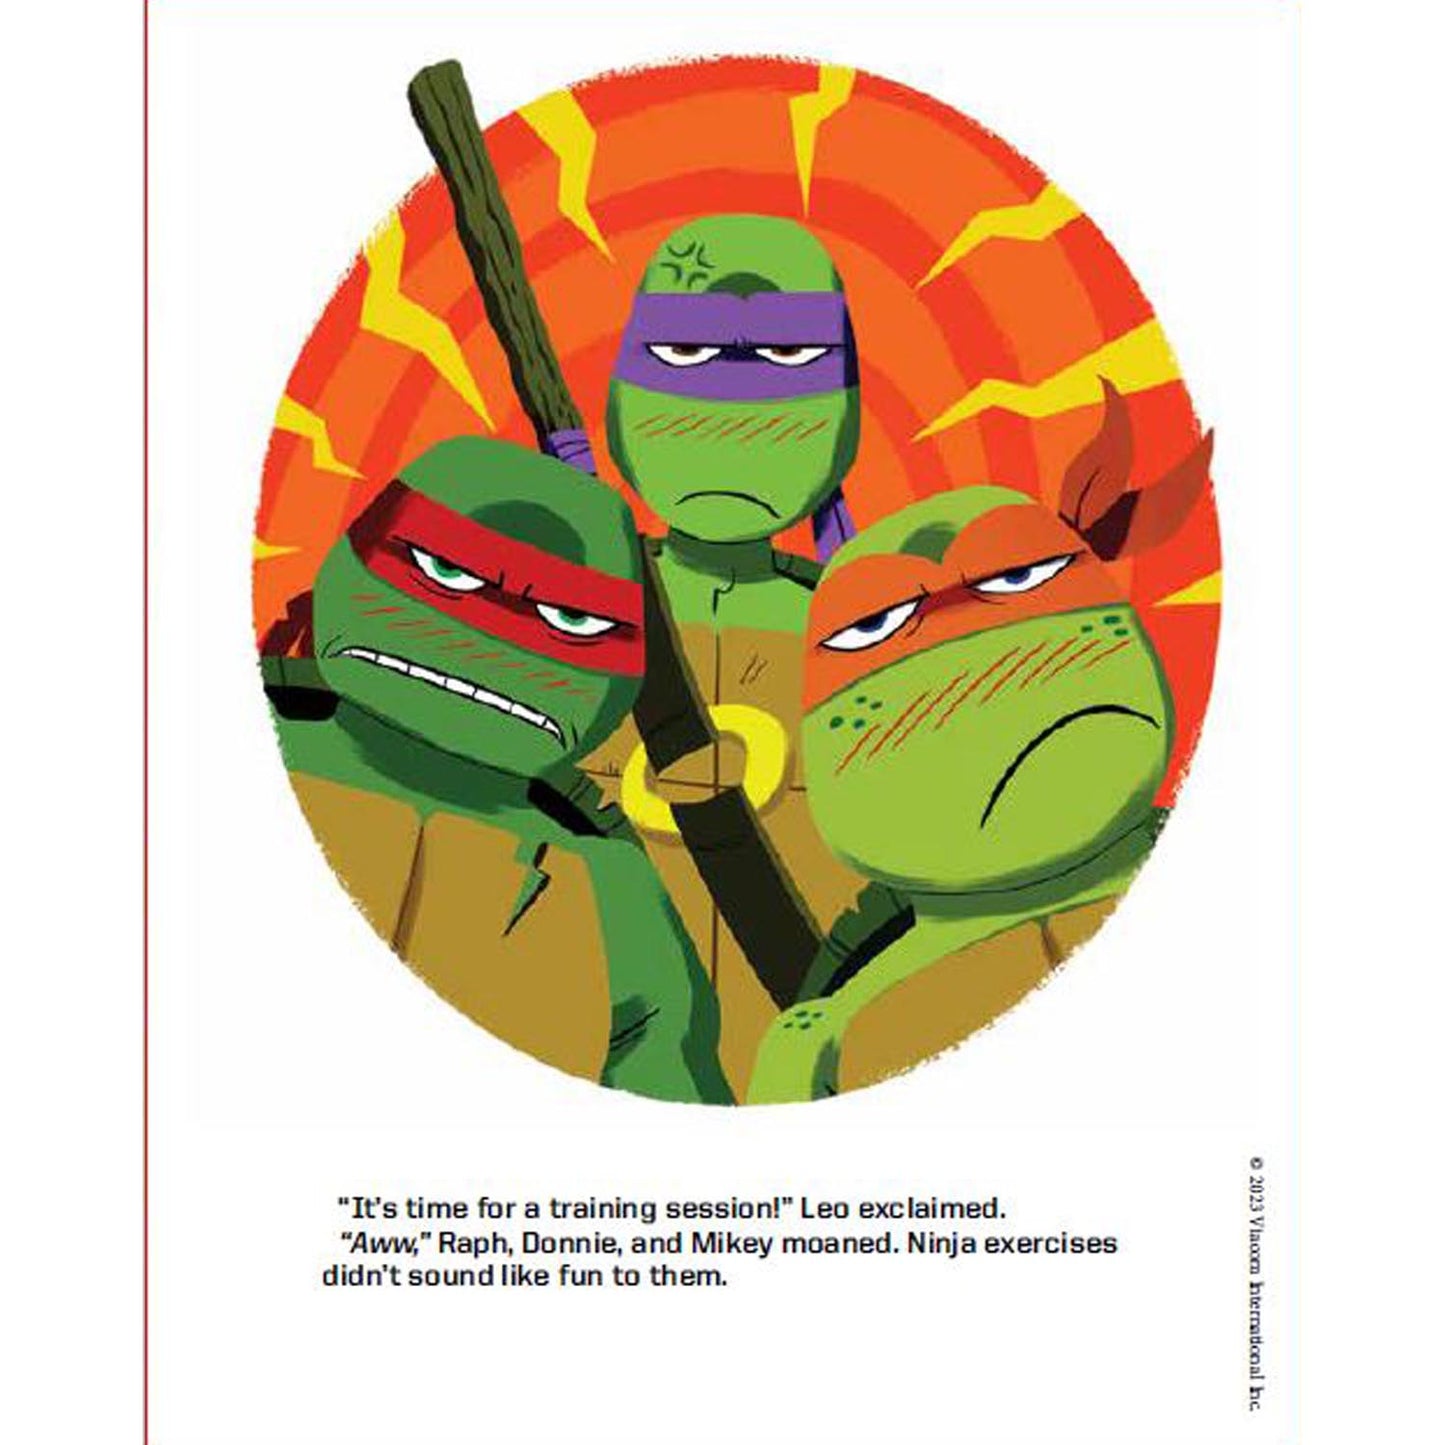 Teenage Mutant Ninja Turtles Follow the Ninja | Movie Storybook | TMNT | Nickelodeon Books | Children's Books